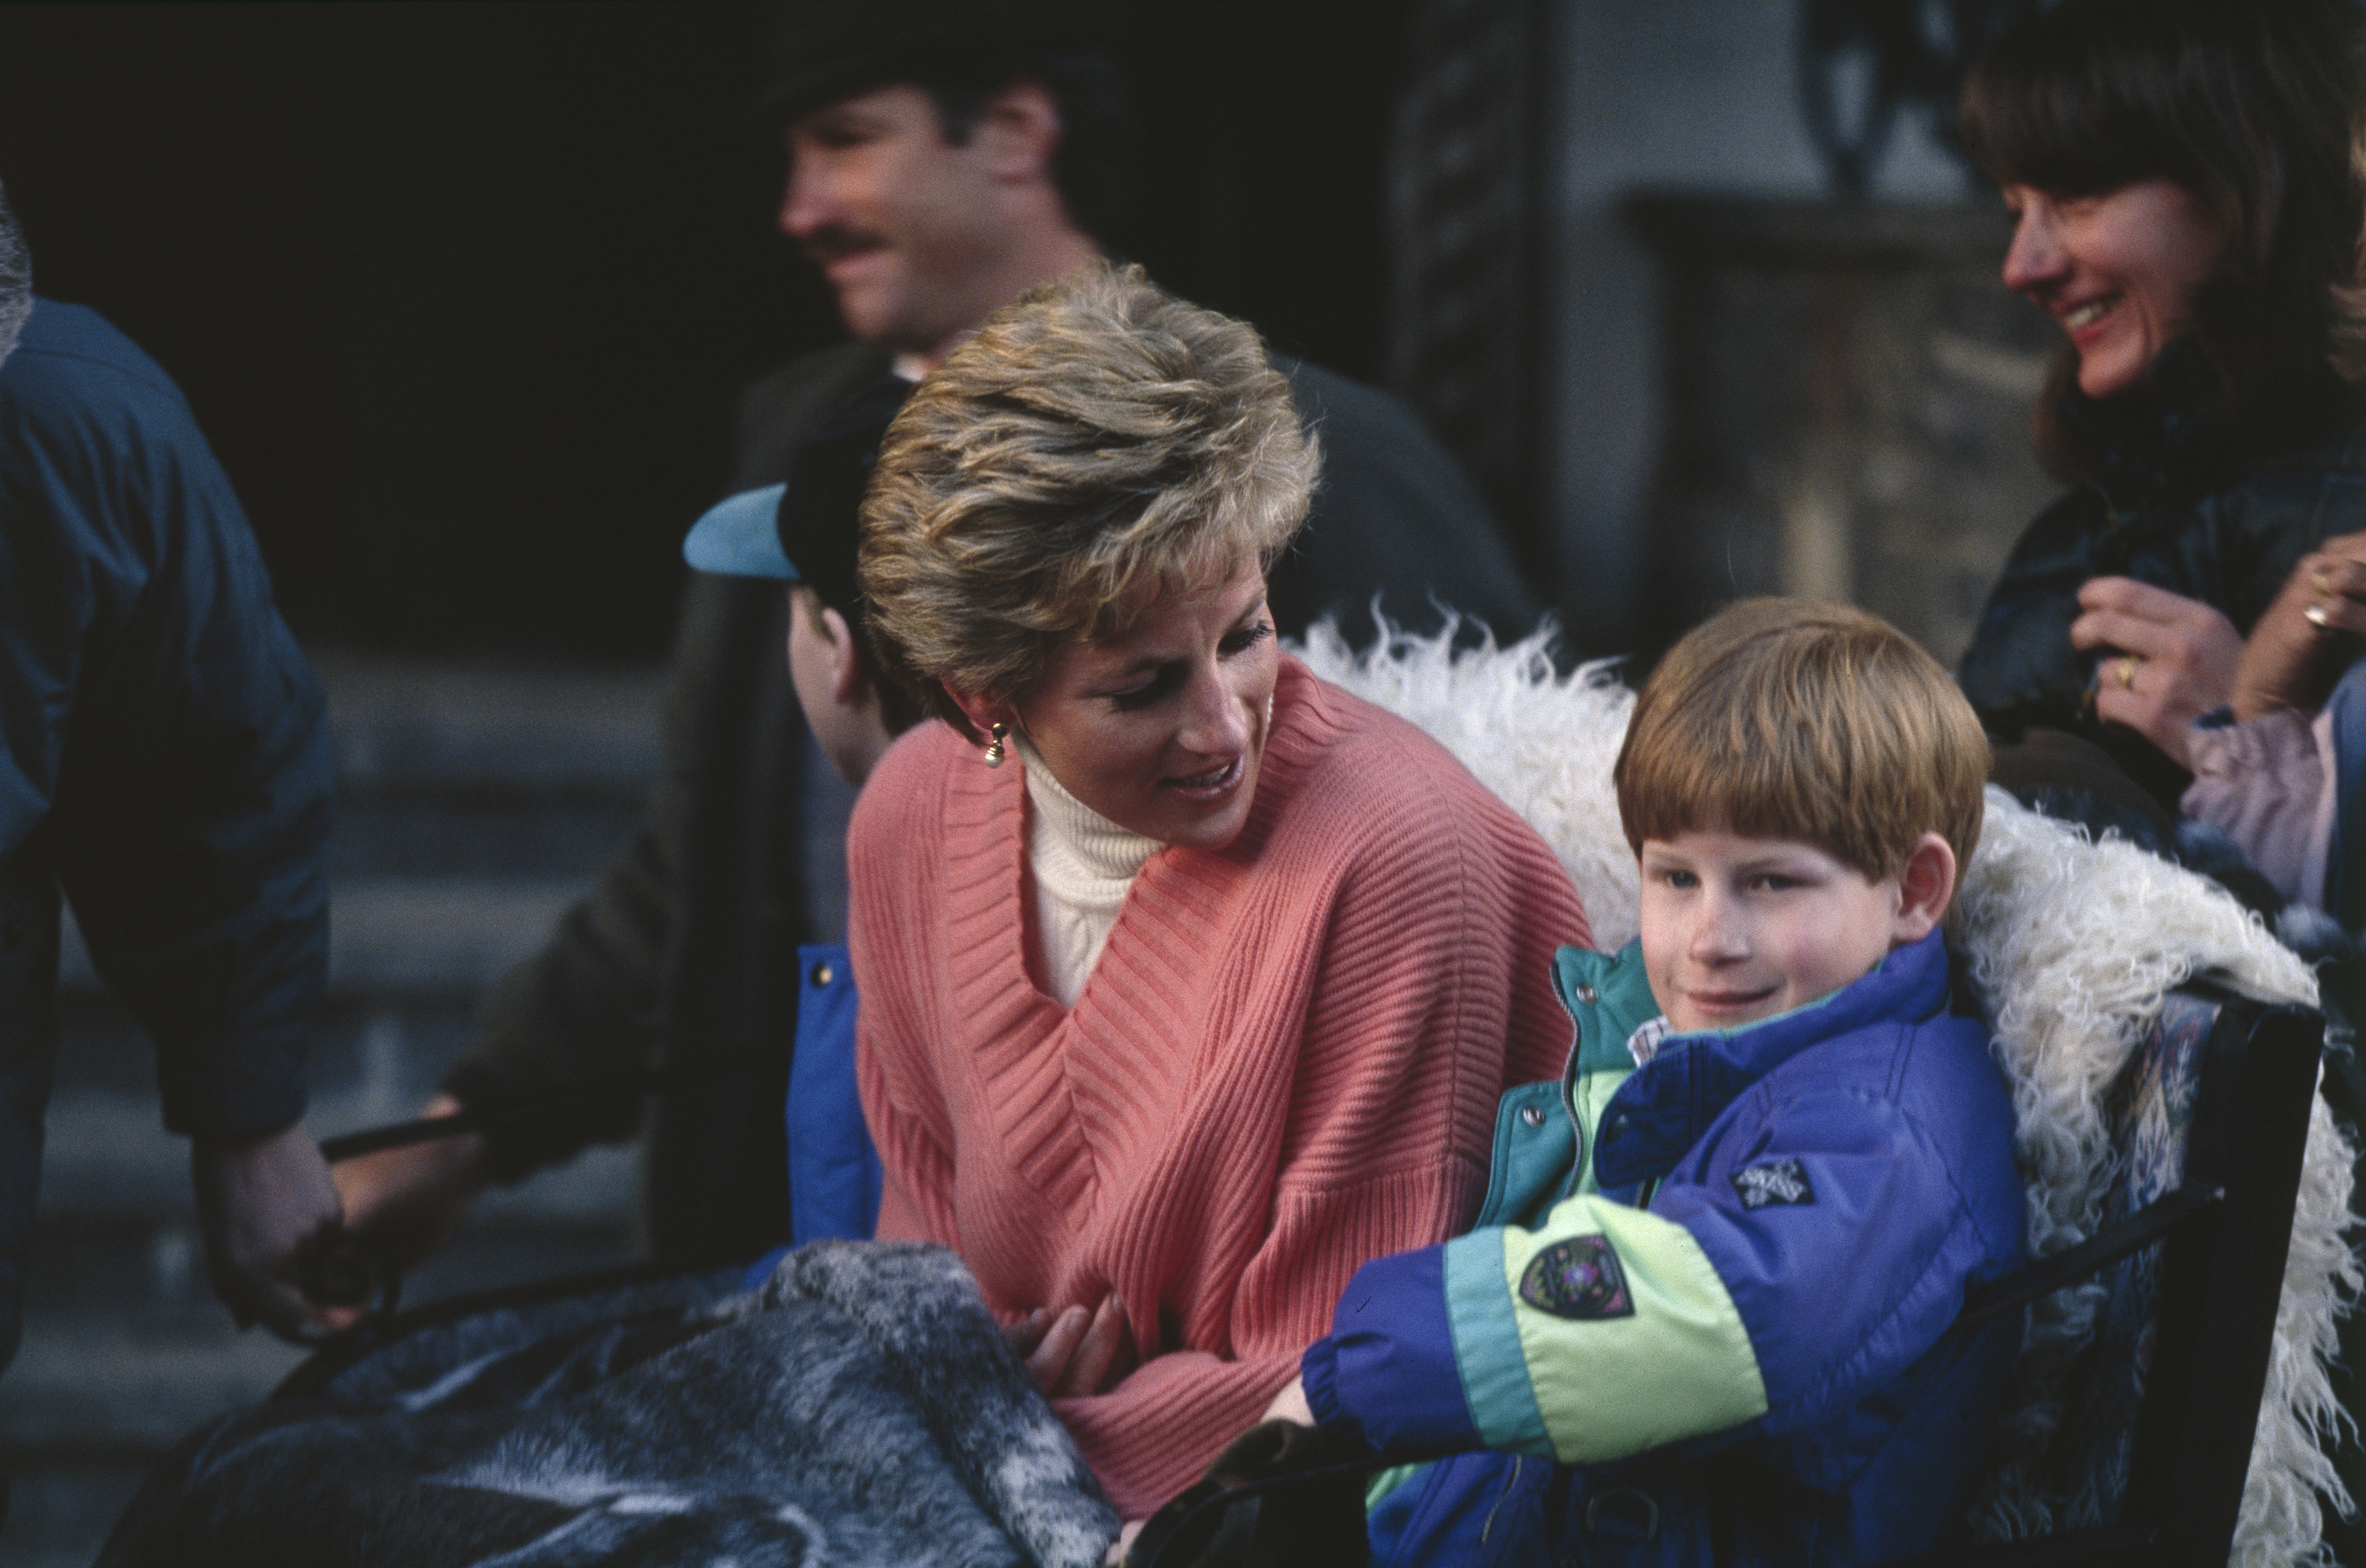 Princess Diana and young Prince Harry